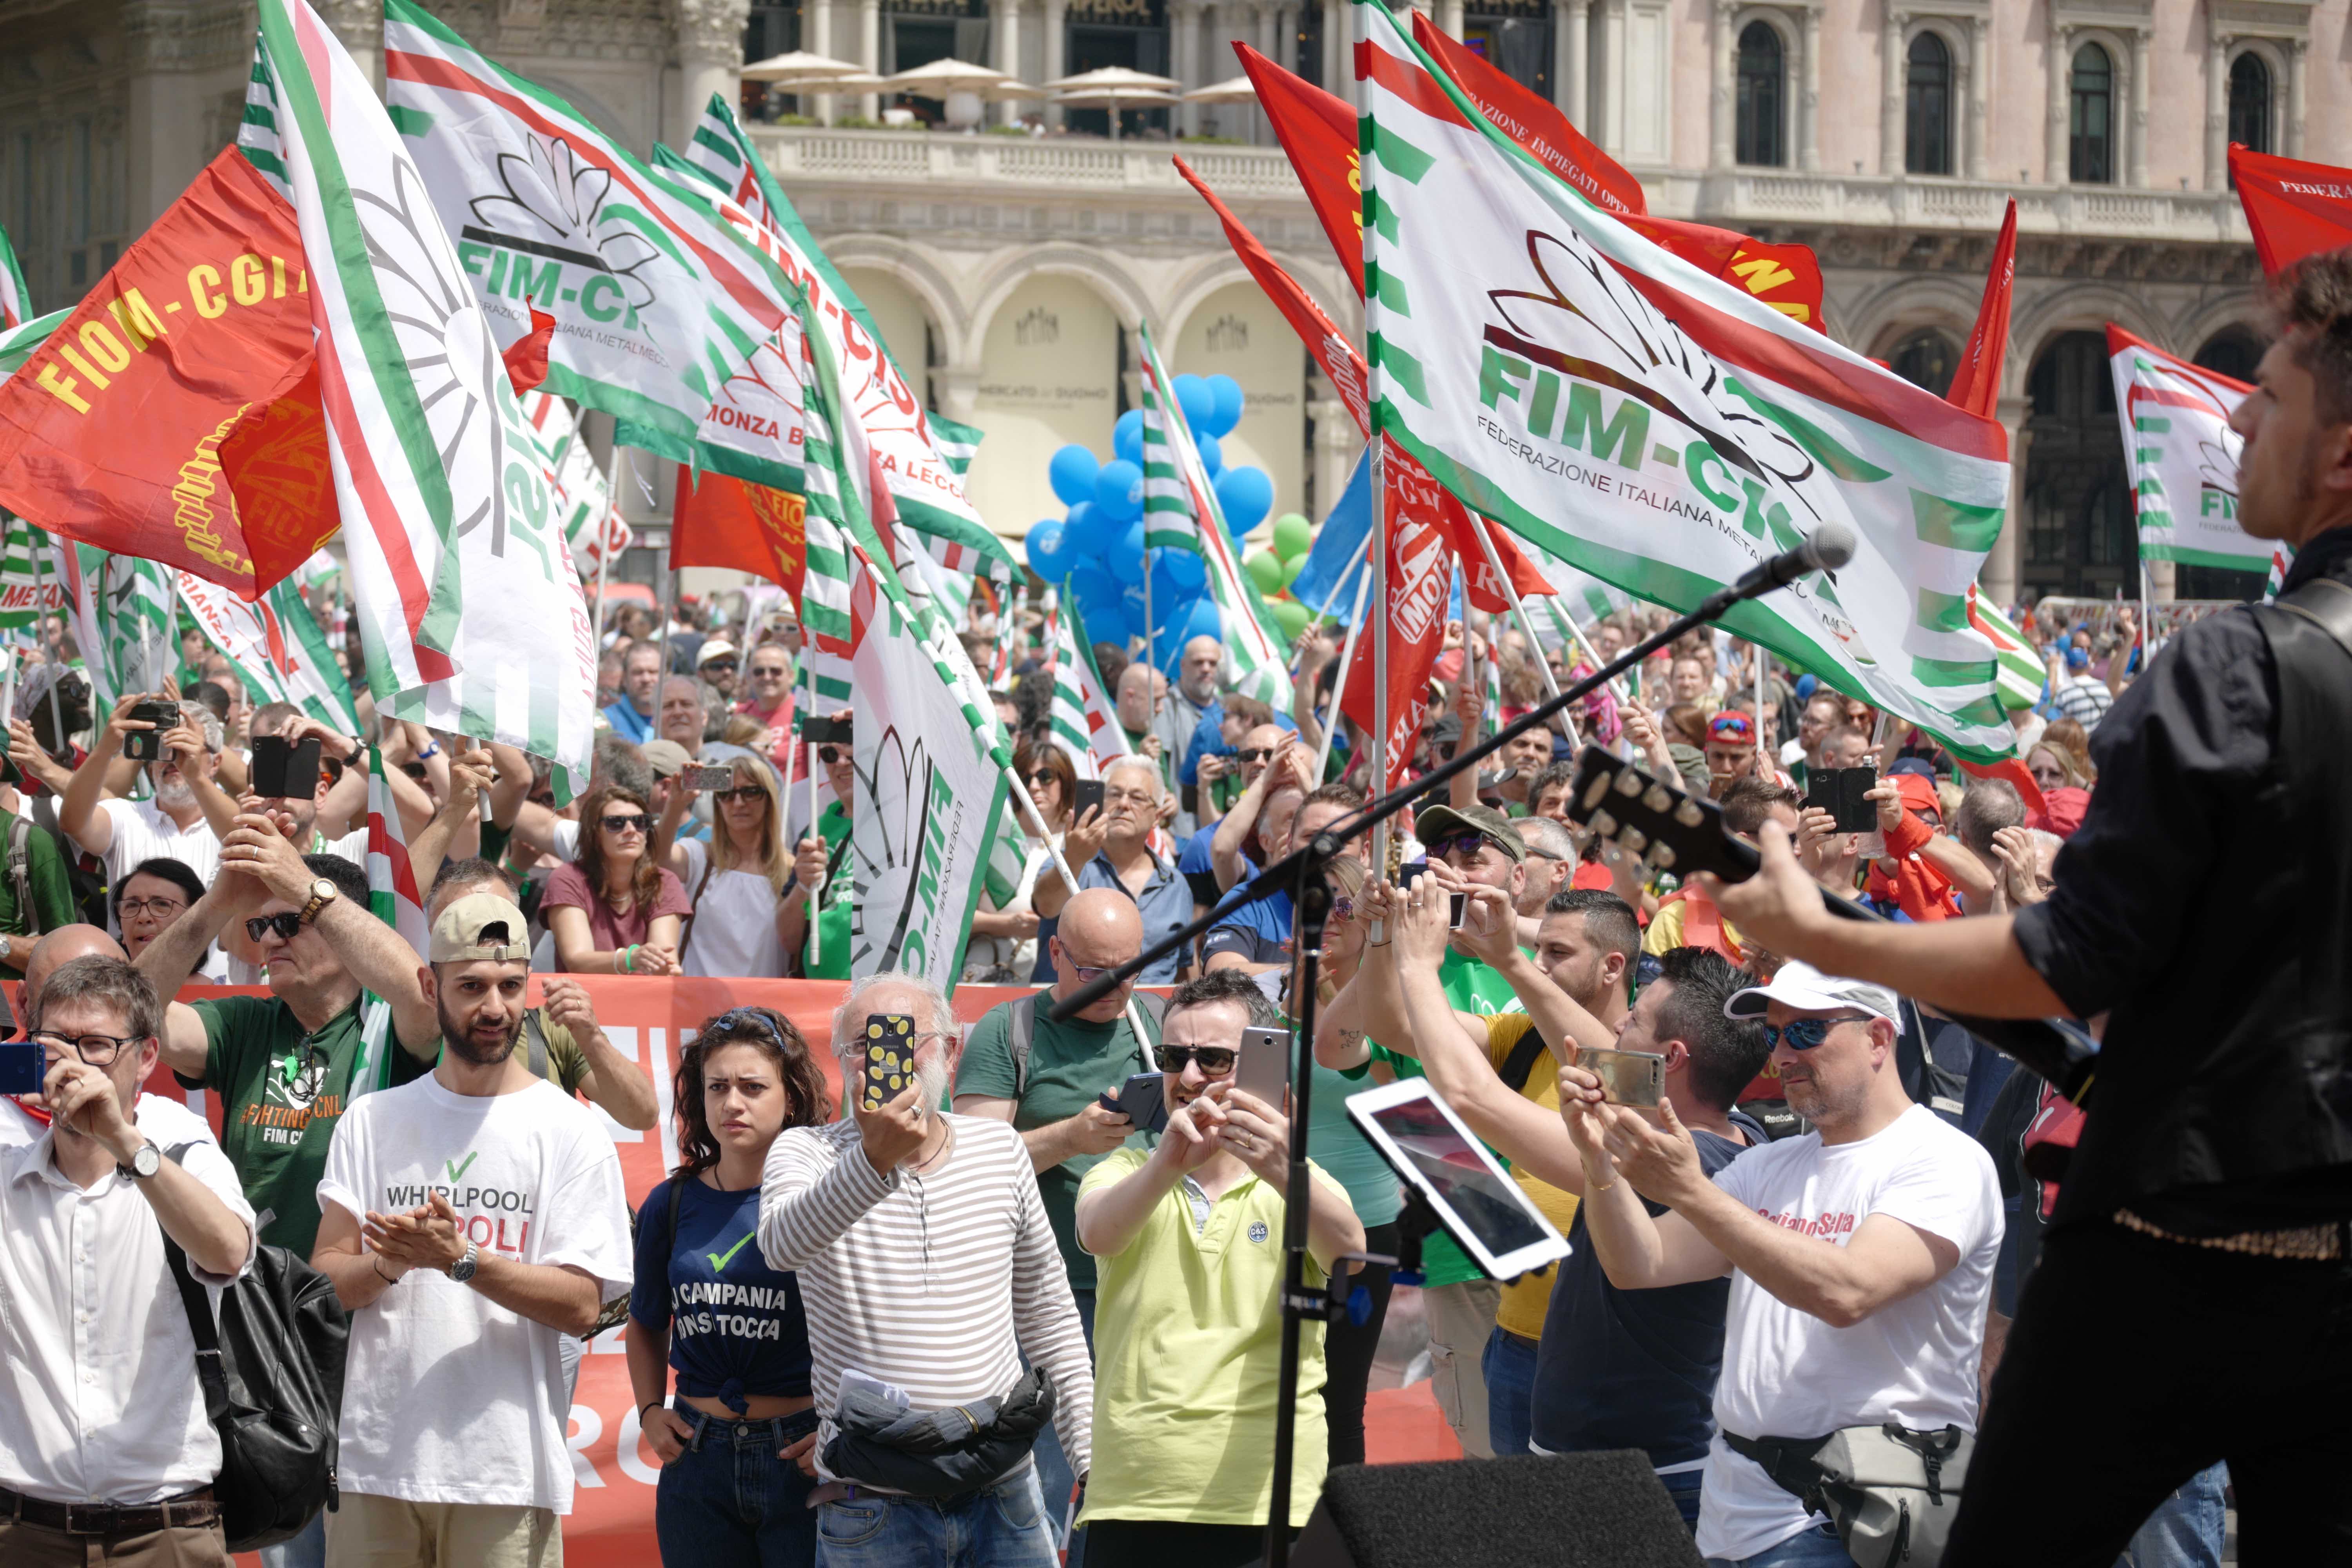 Una manifestazione a Milano